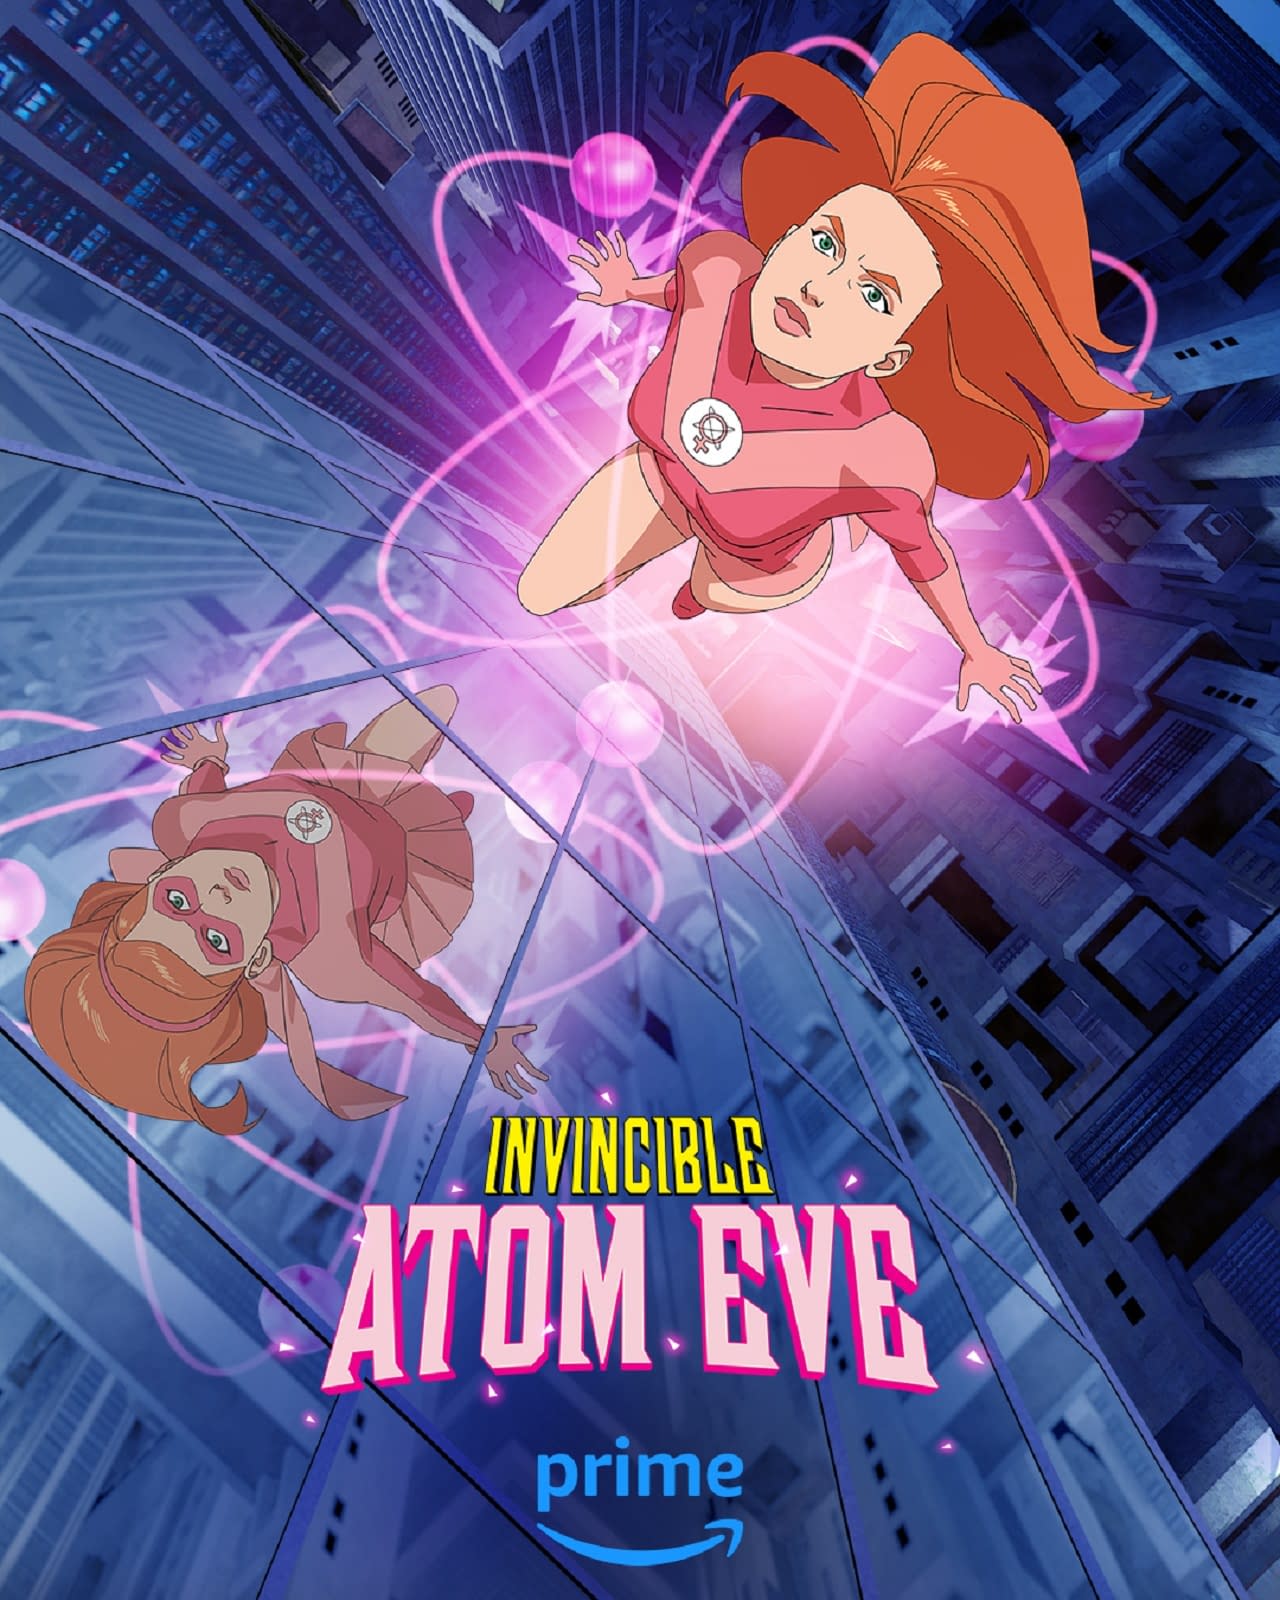 Invincible: Special Atom Eve Origin Episode Hits Prime Video Tonight